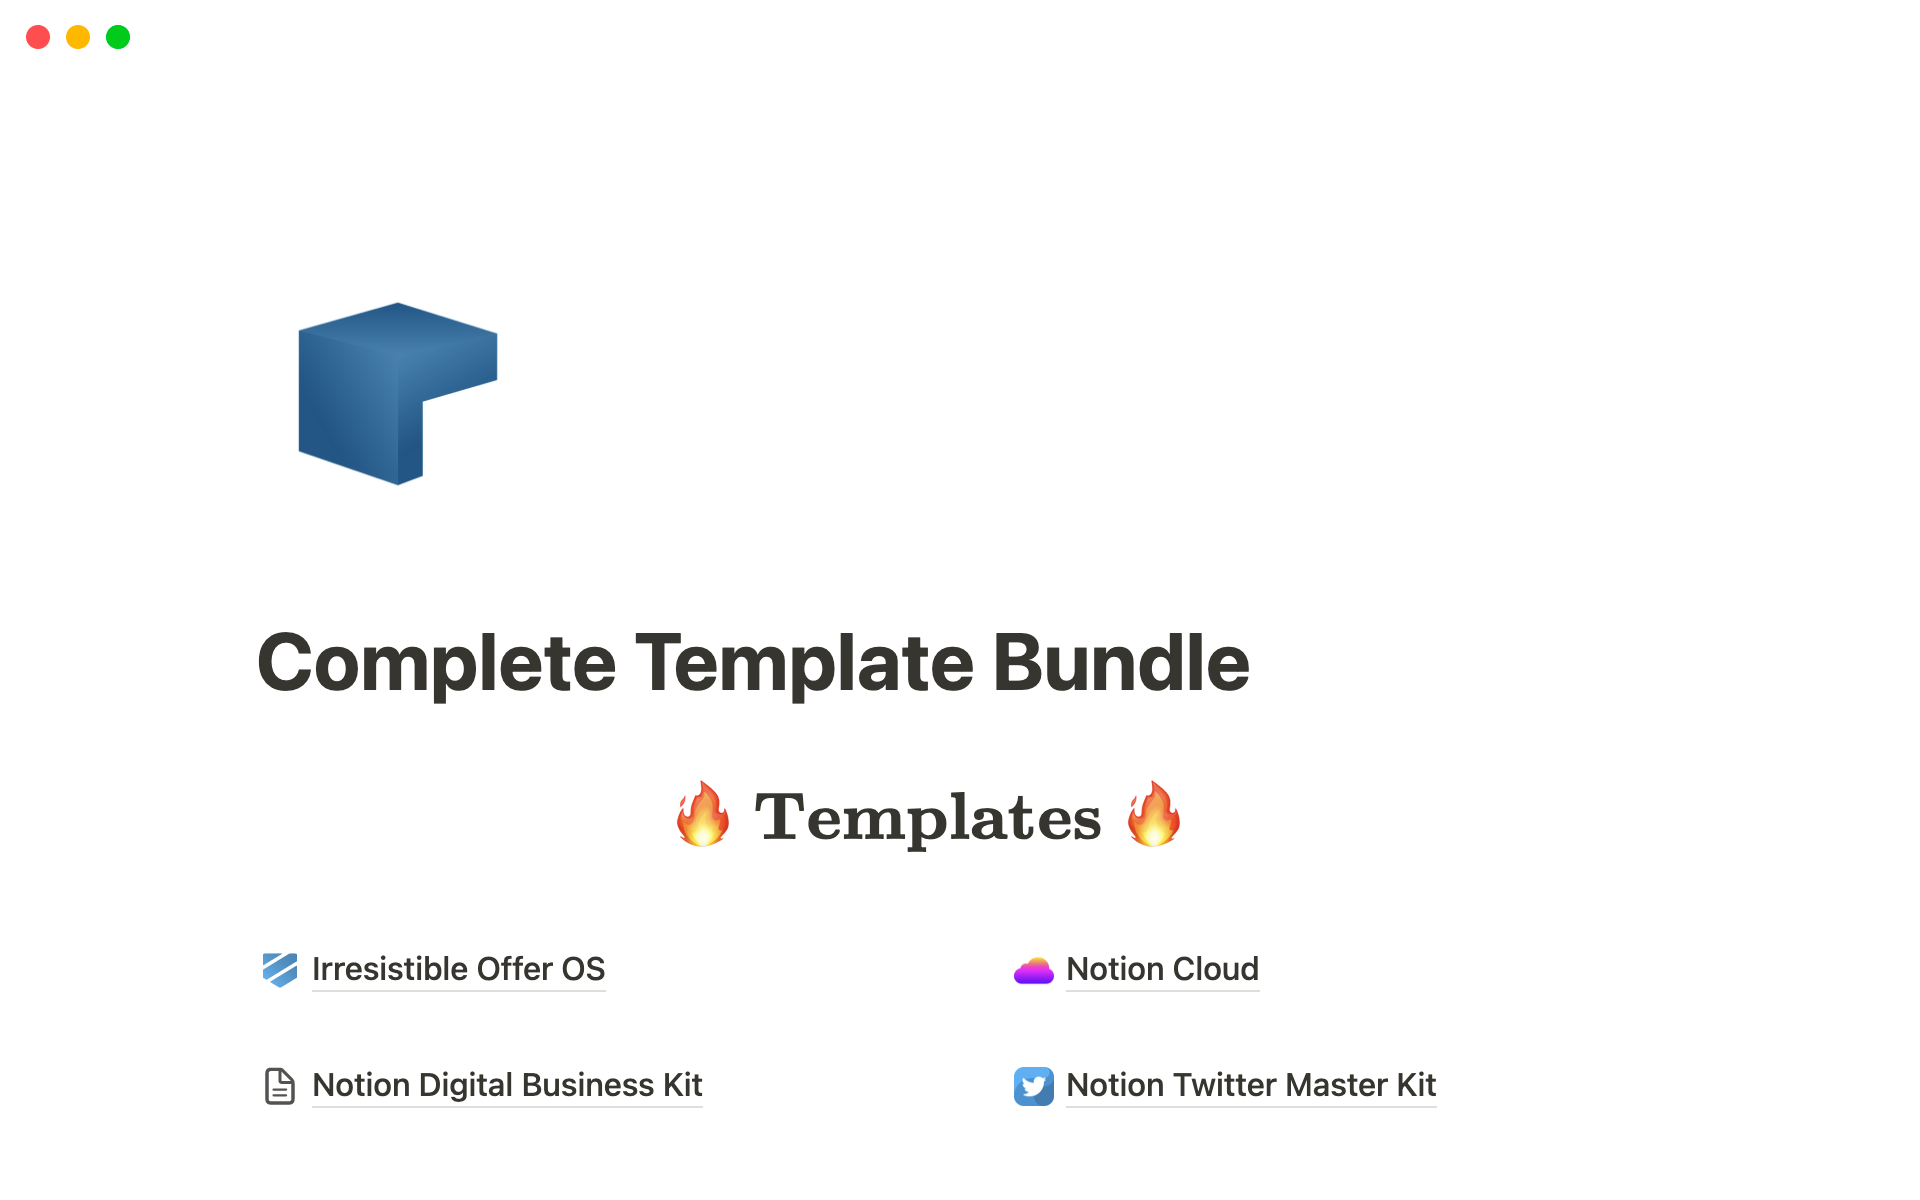 Complete Template Bundleのテンプレートのプレビュー